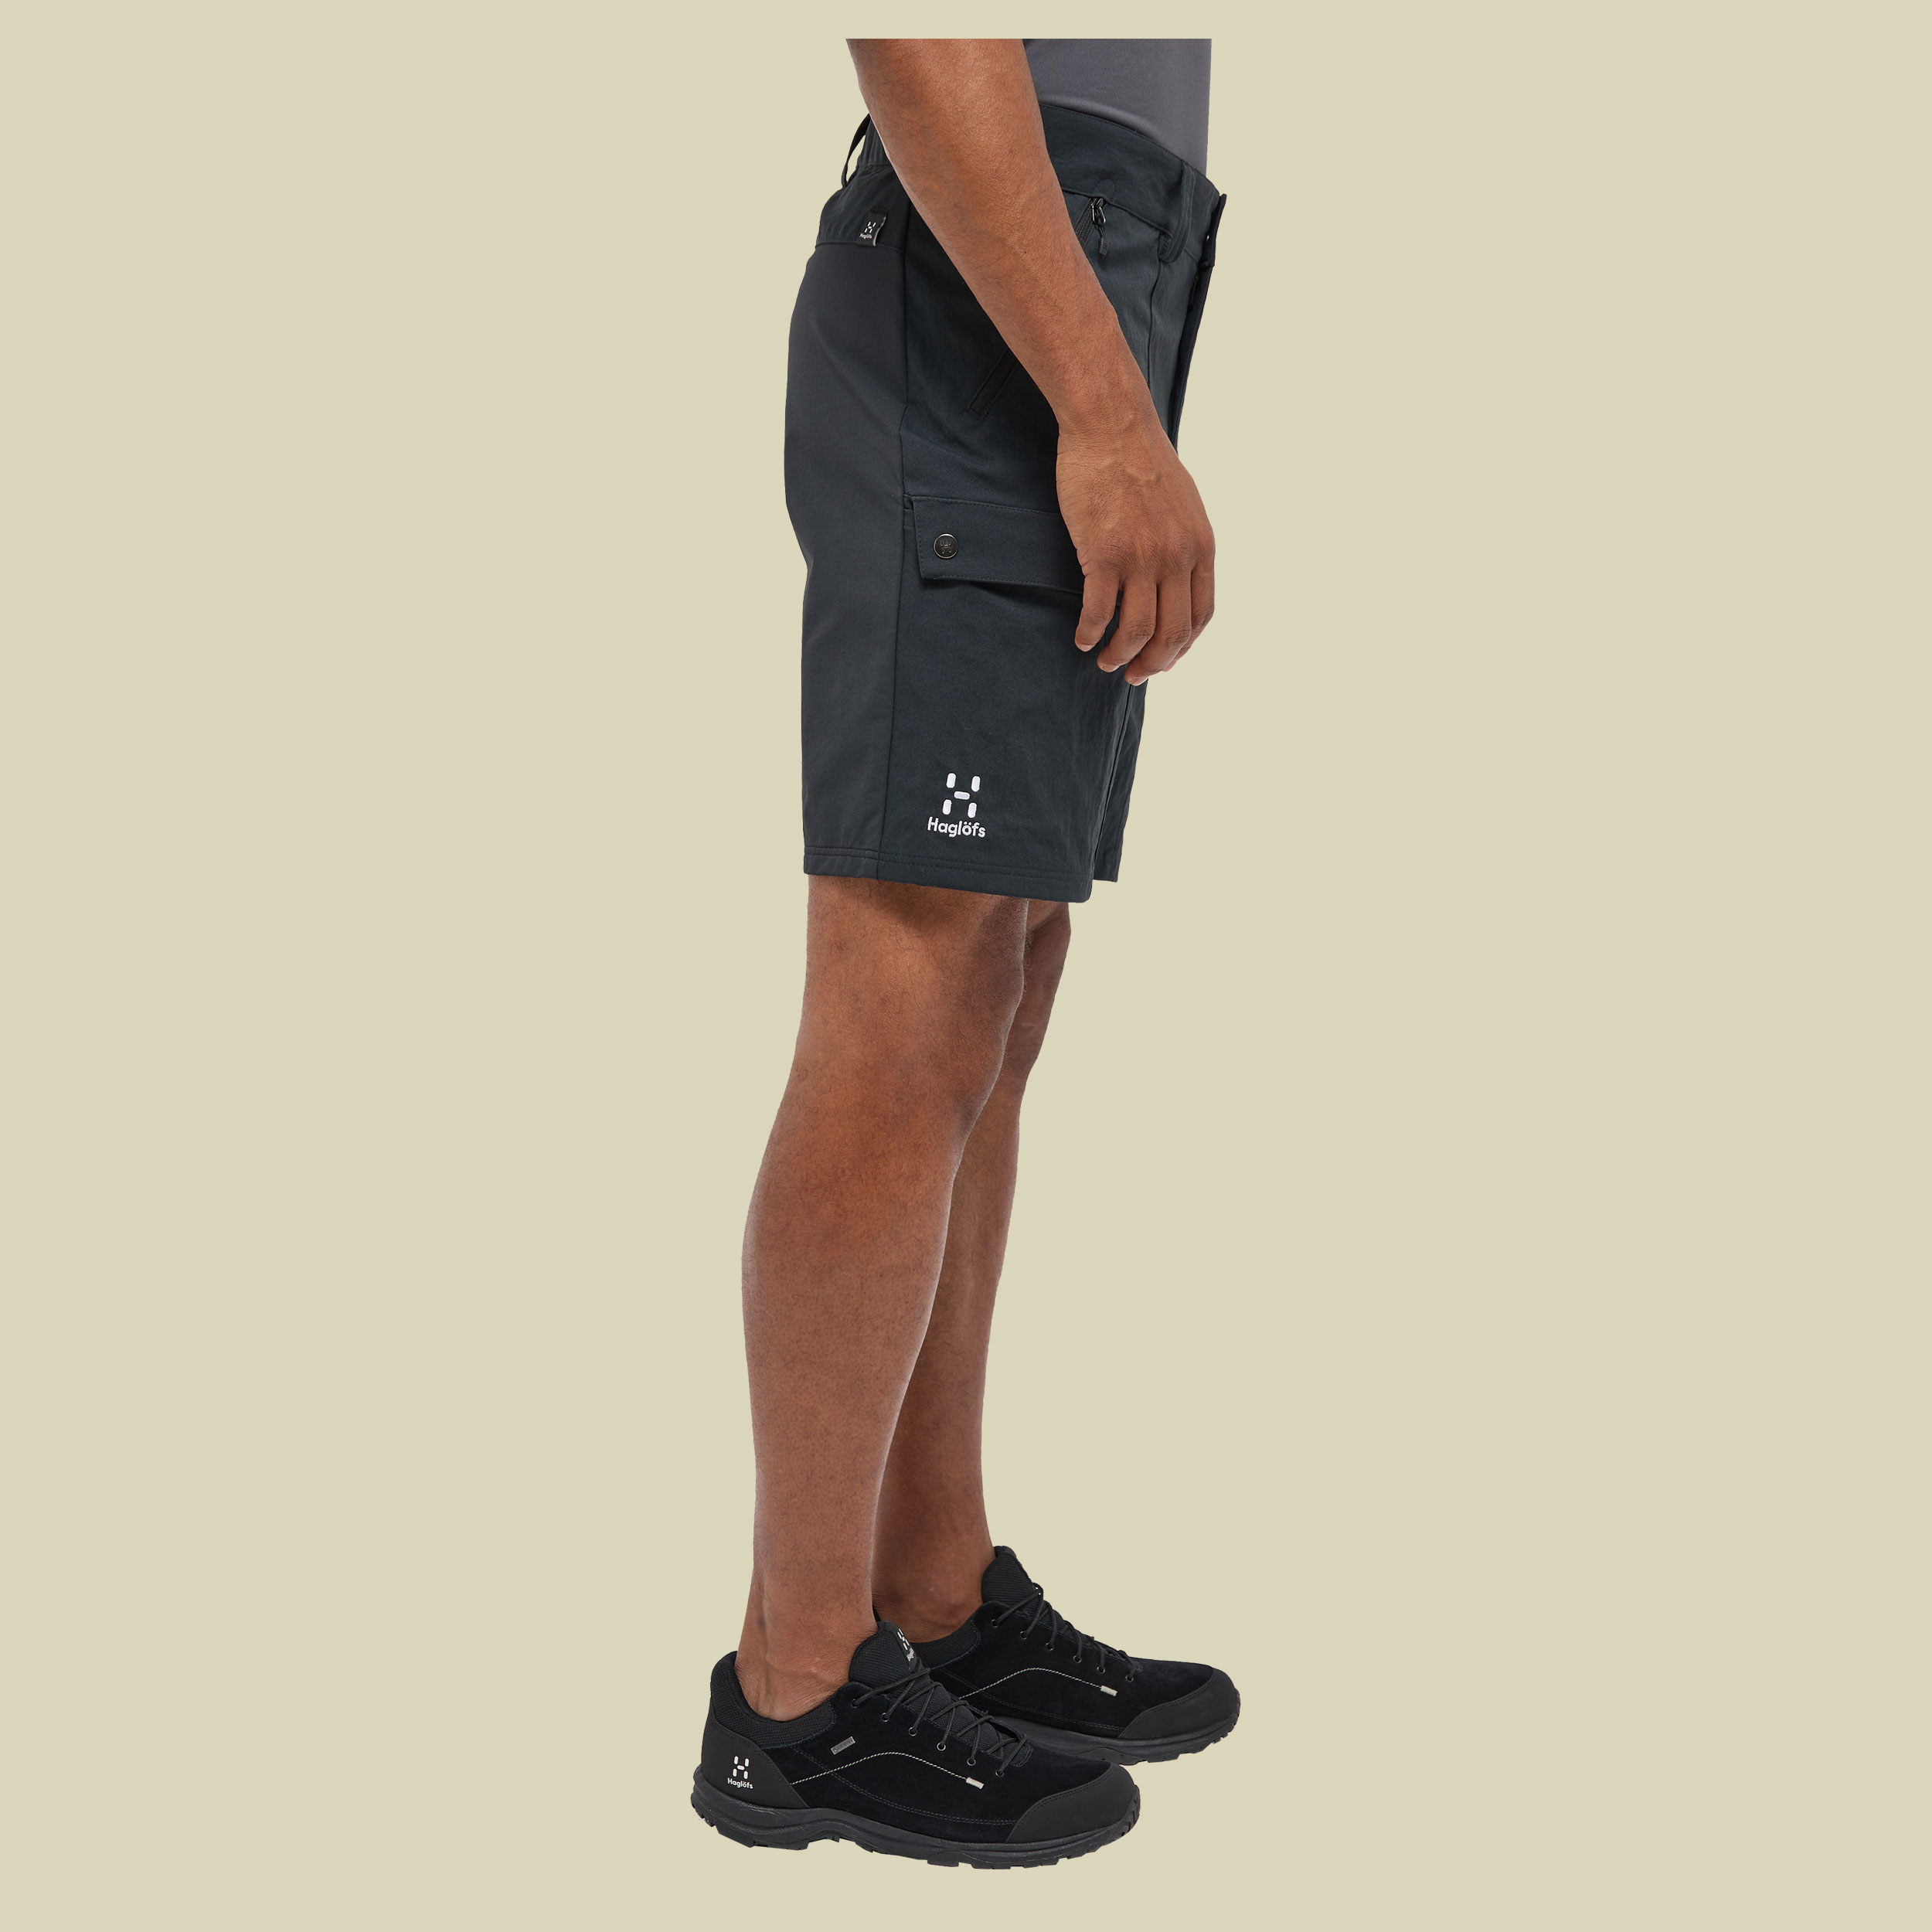 Mid Standard Shorts Men 52 schwarz - true black